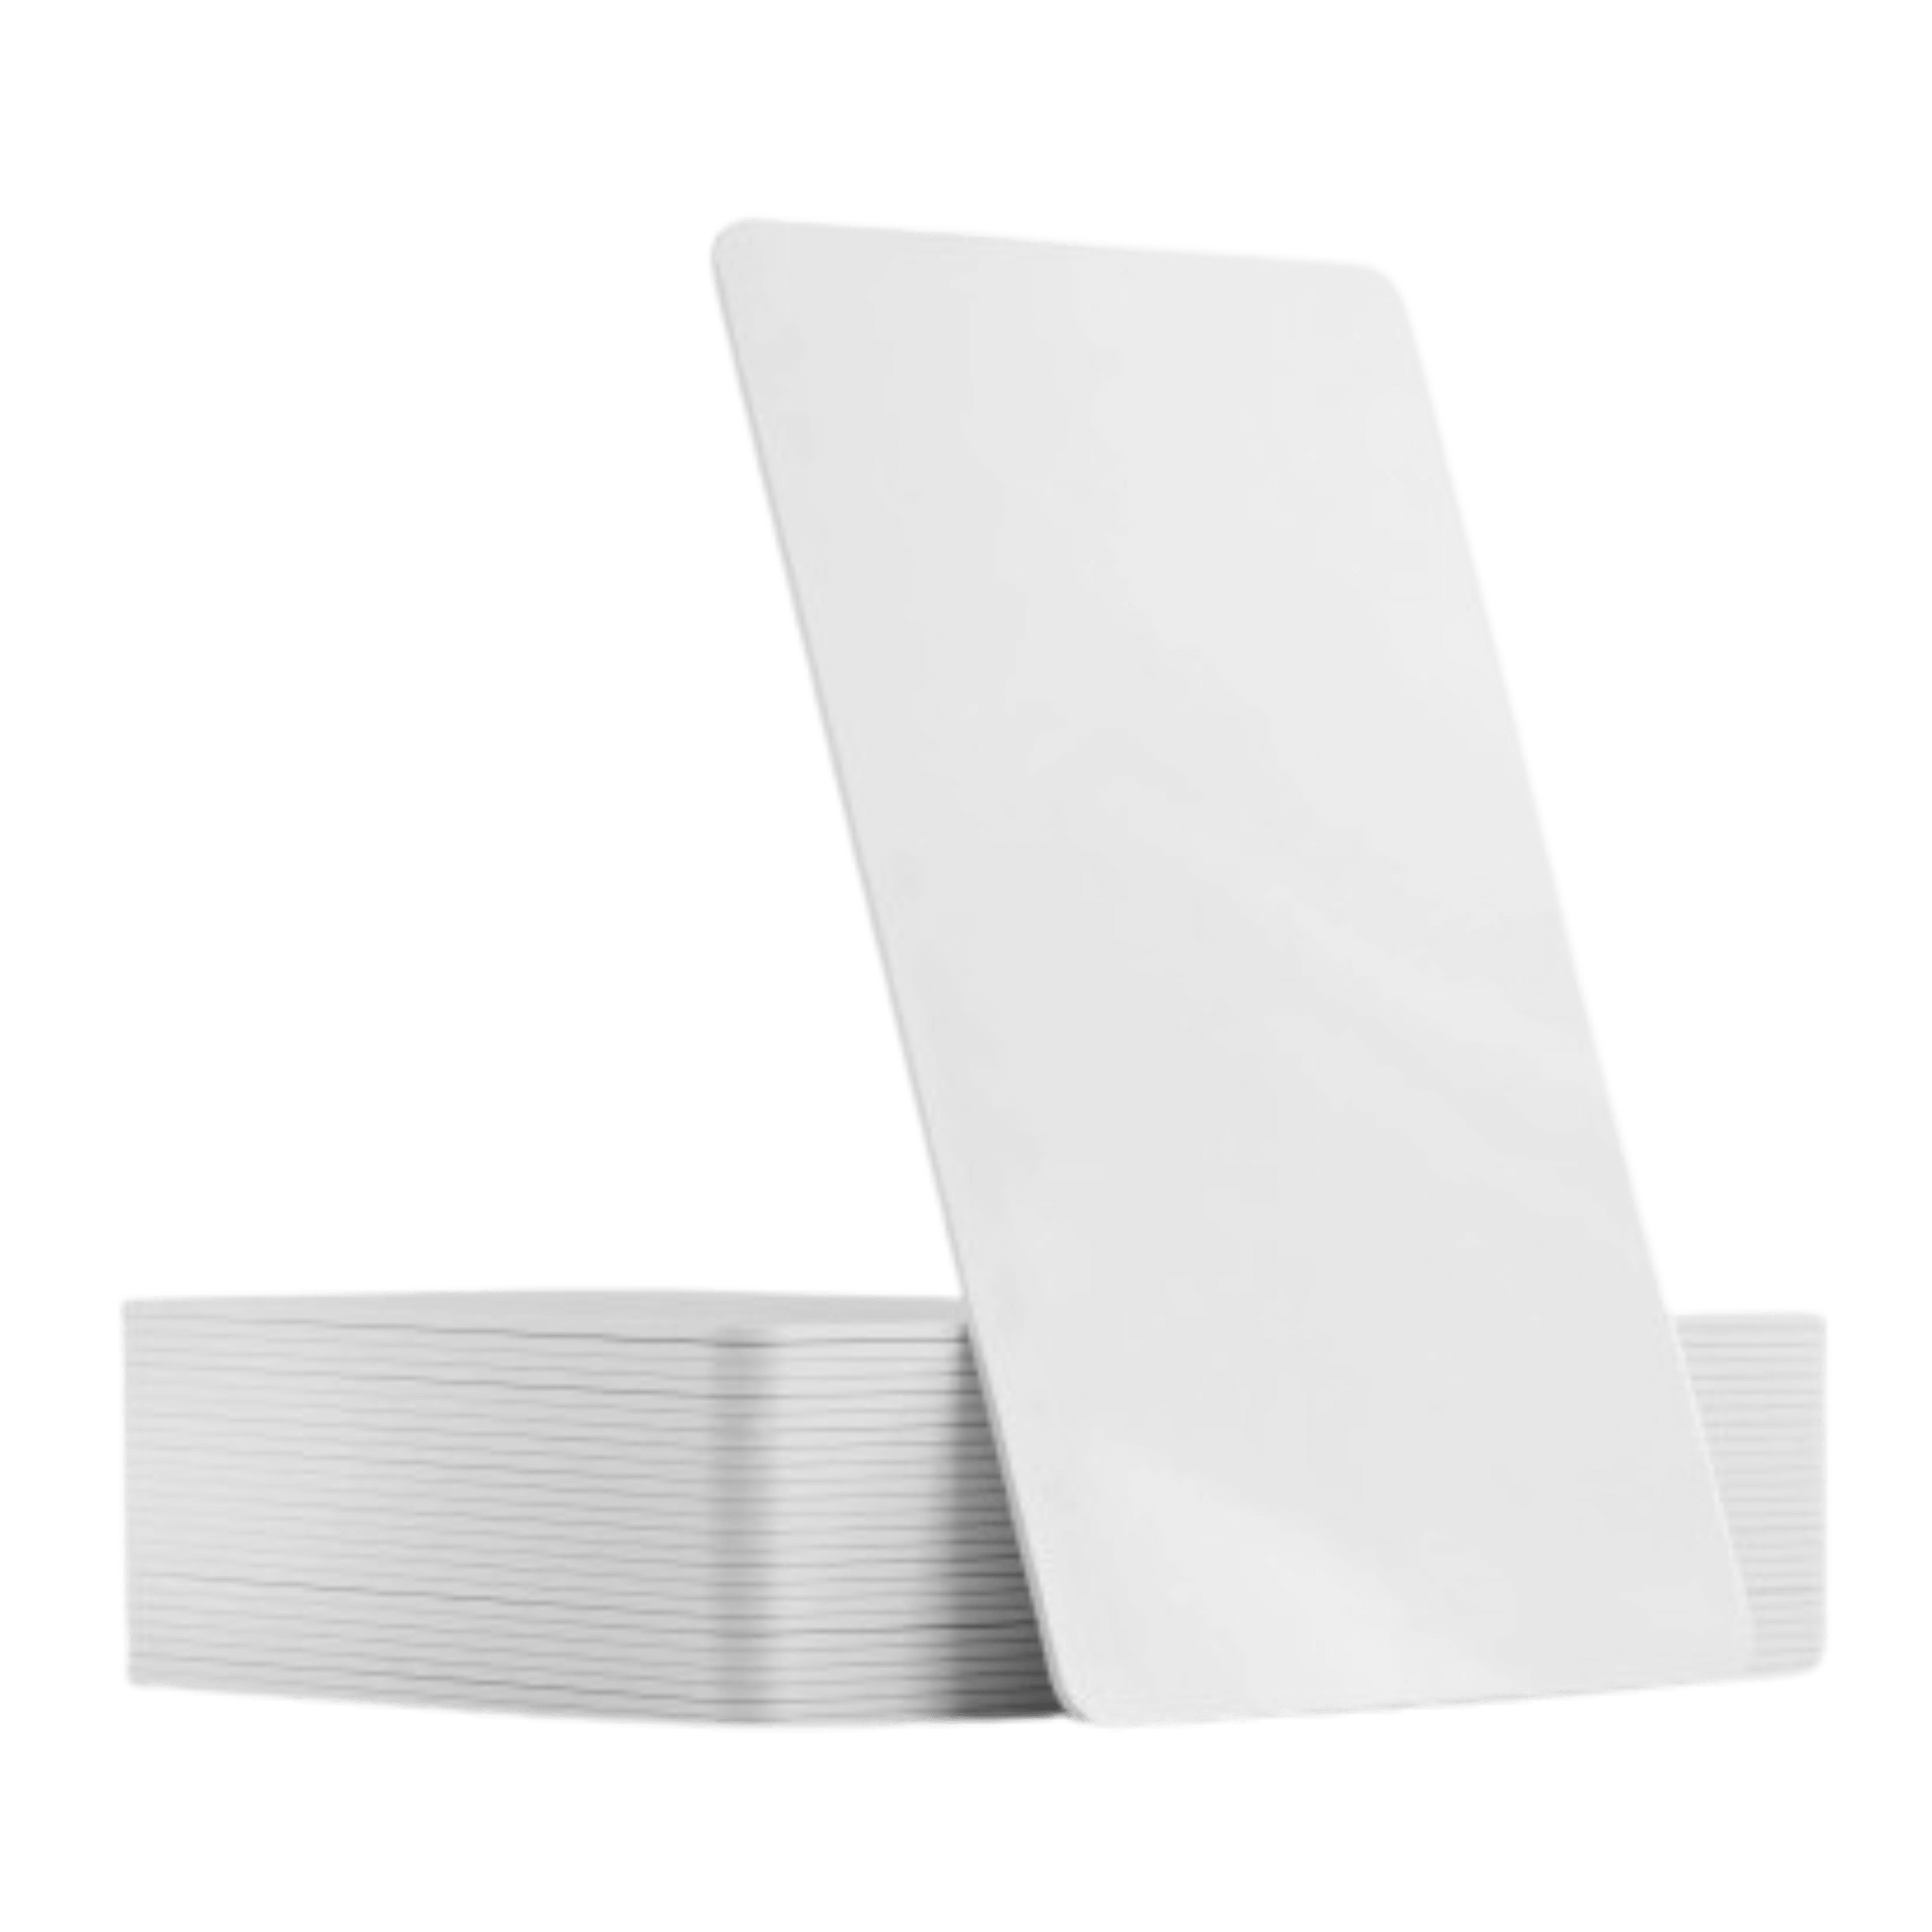 Enviricard Blank White Sustainable Paperboard Cards